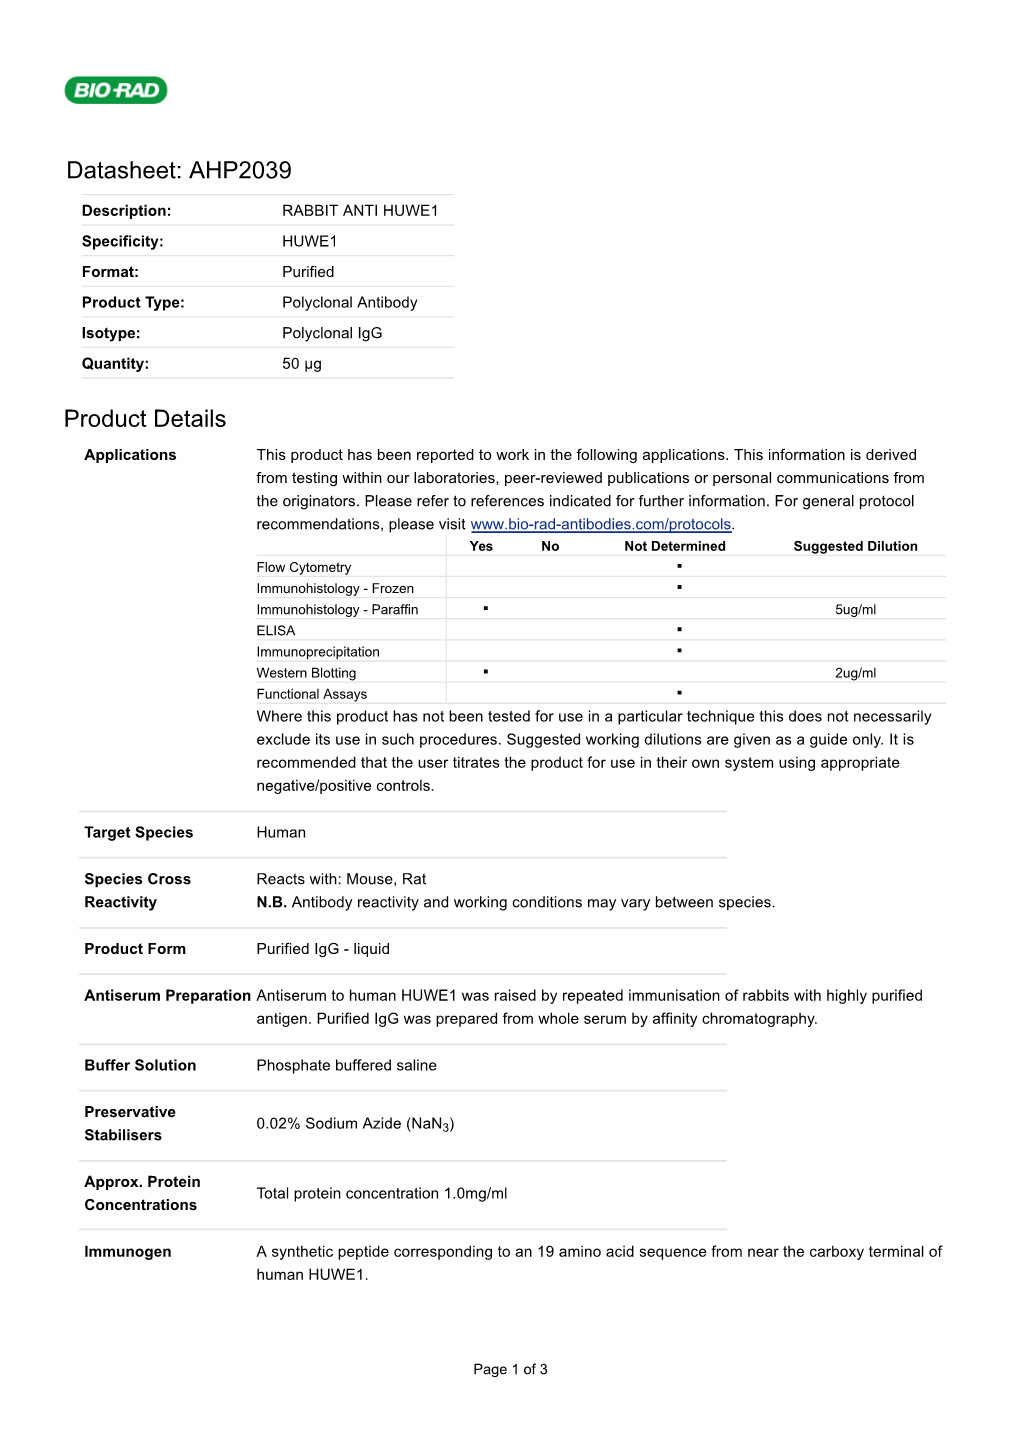 Datasheet: AHP2039 Product Details